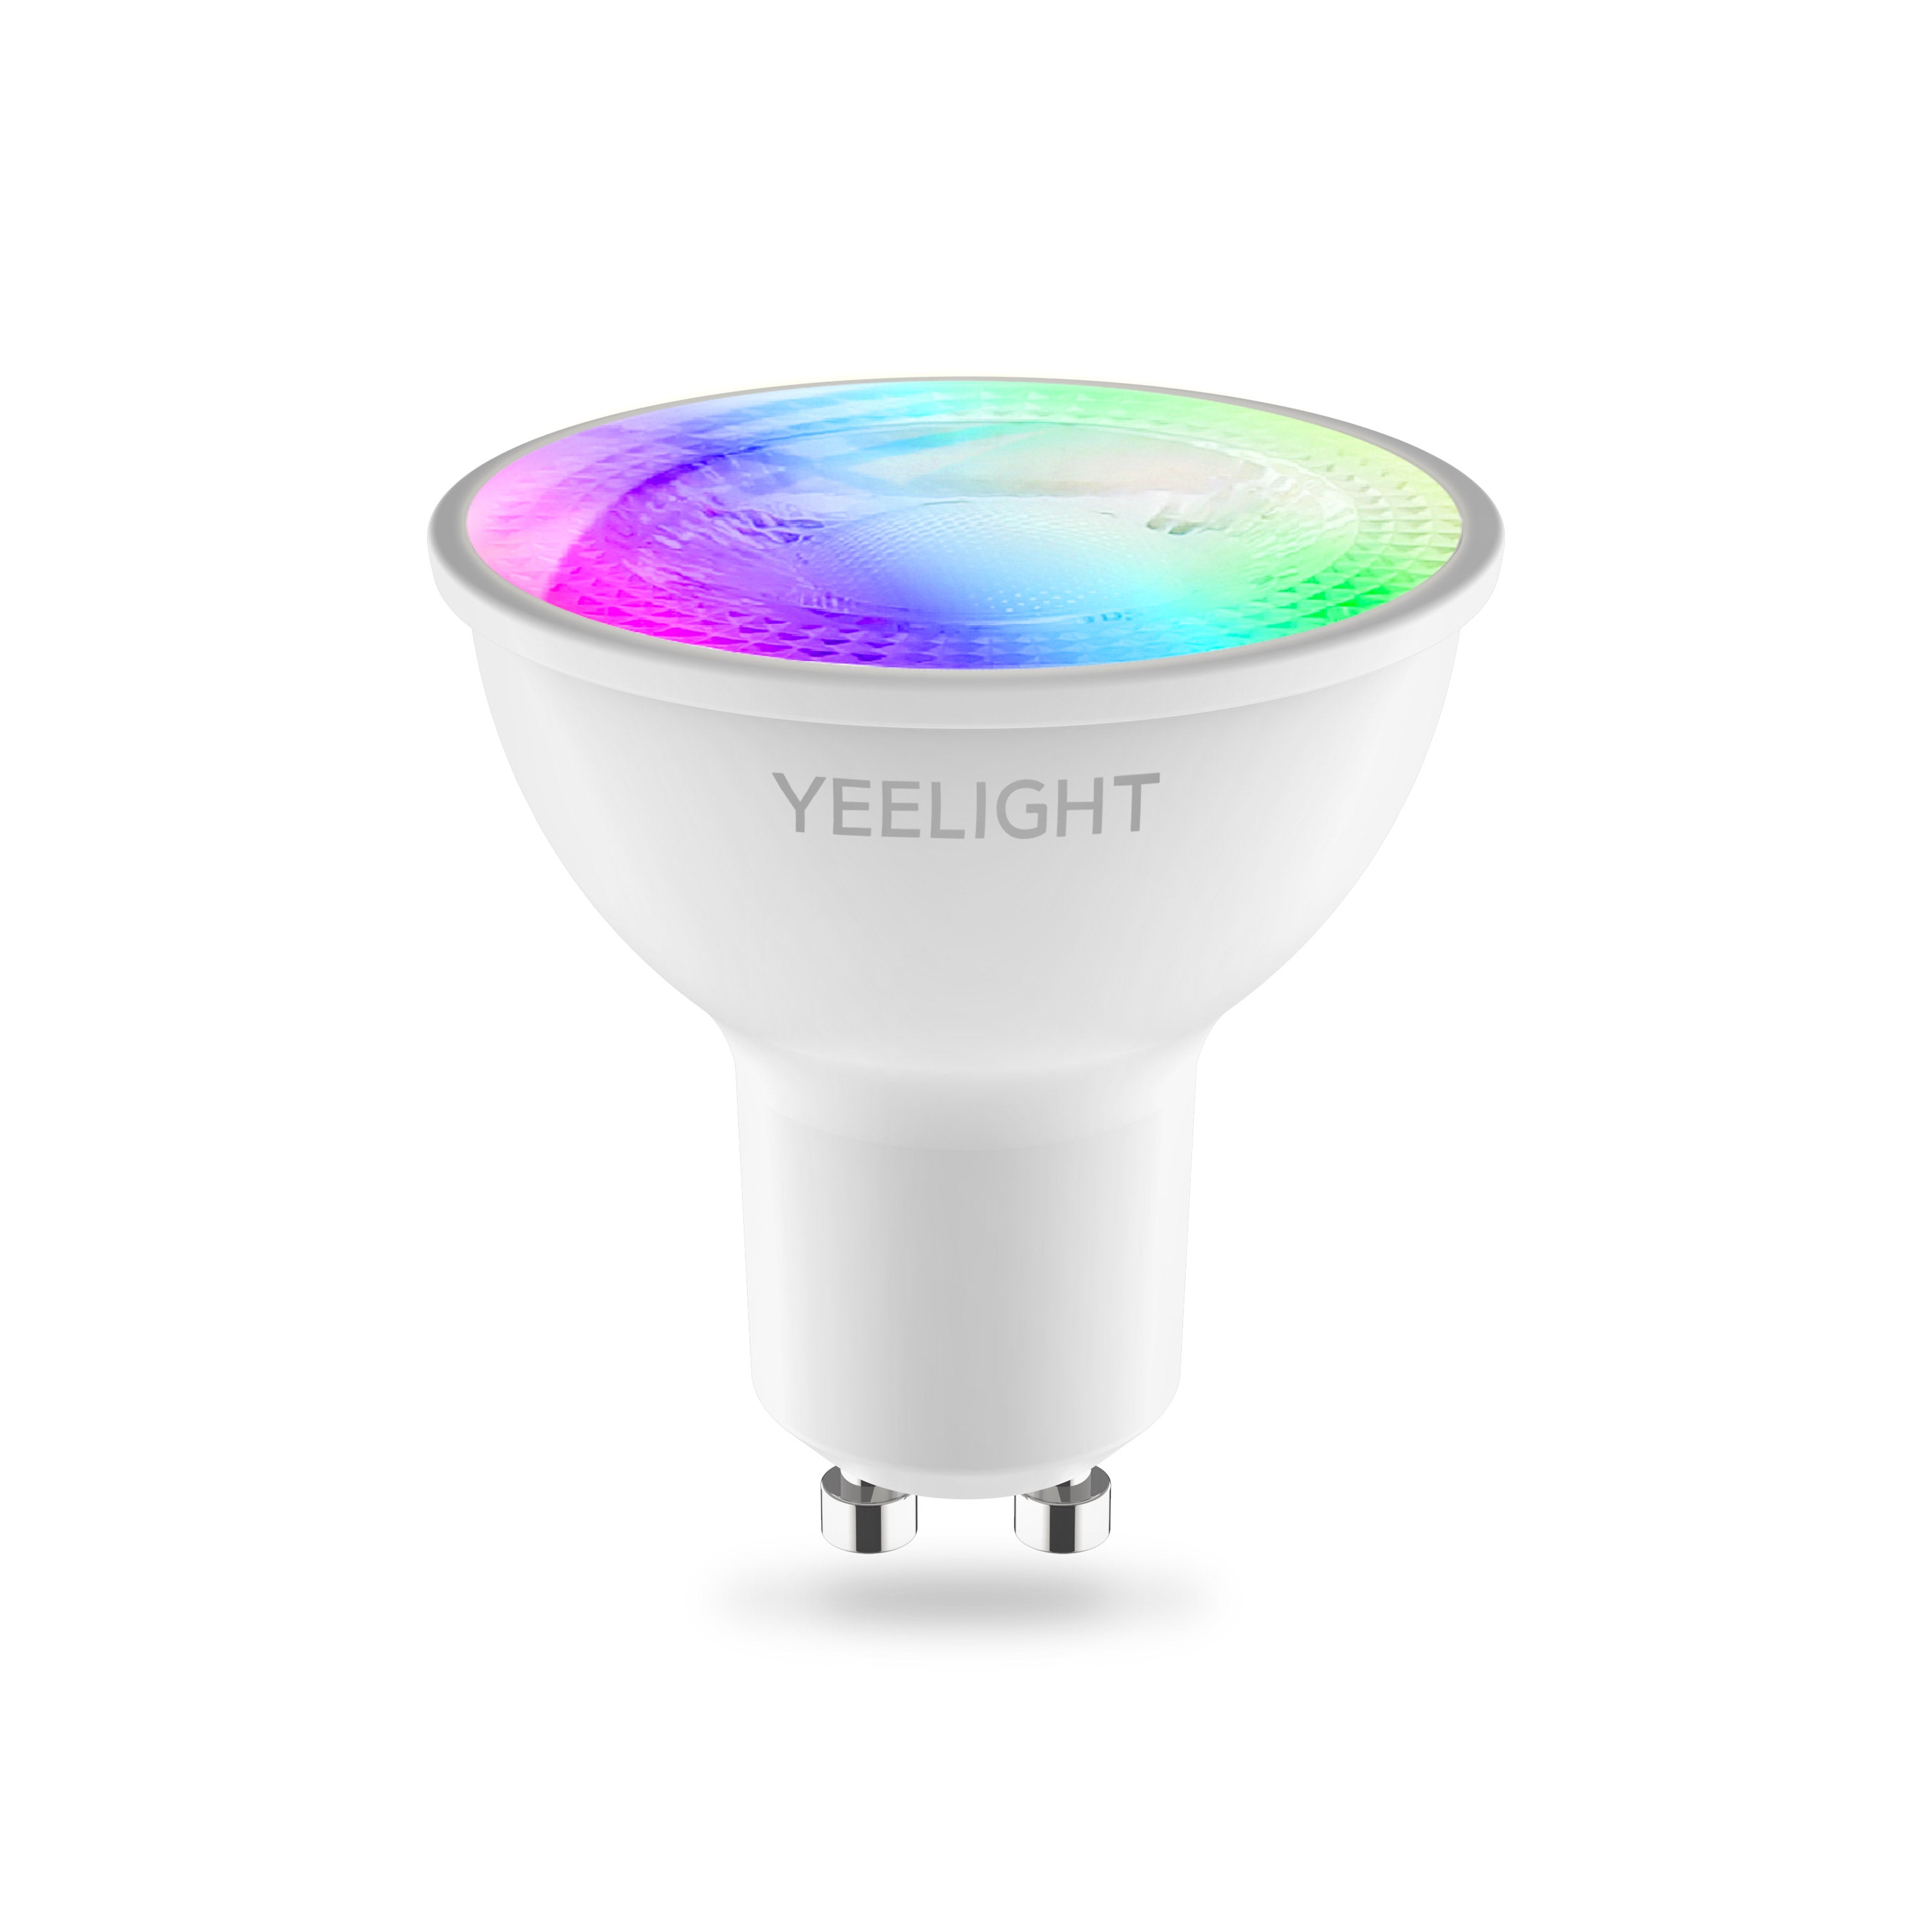 Yeelight GU10 Smart Bulb W1 (Multicolor)